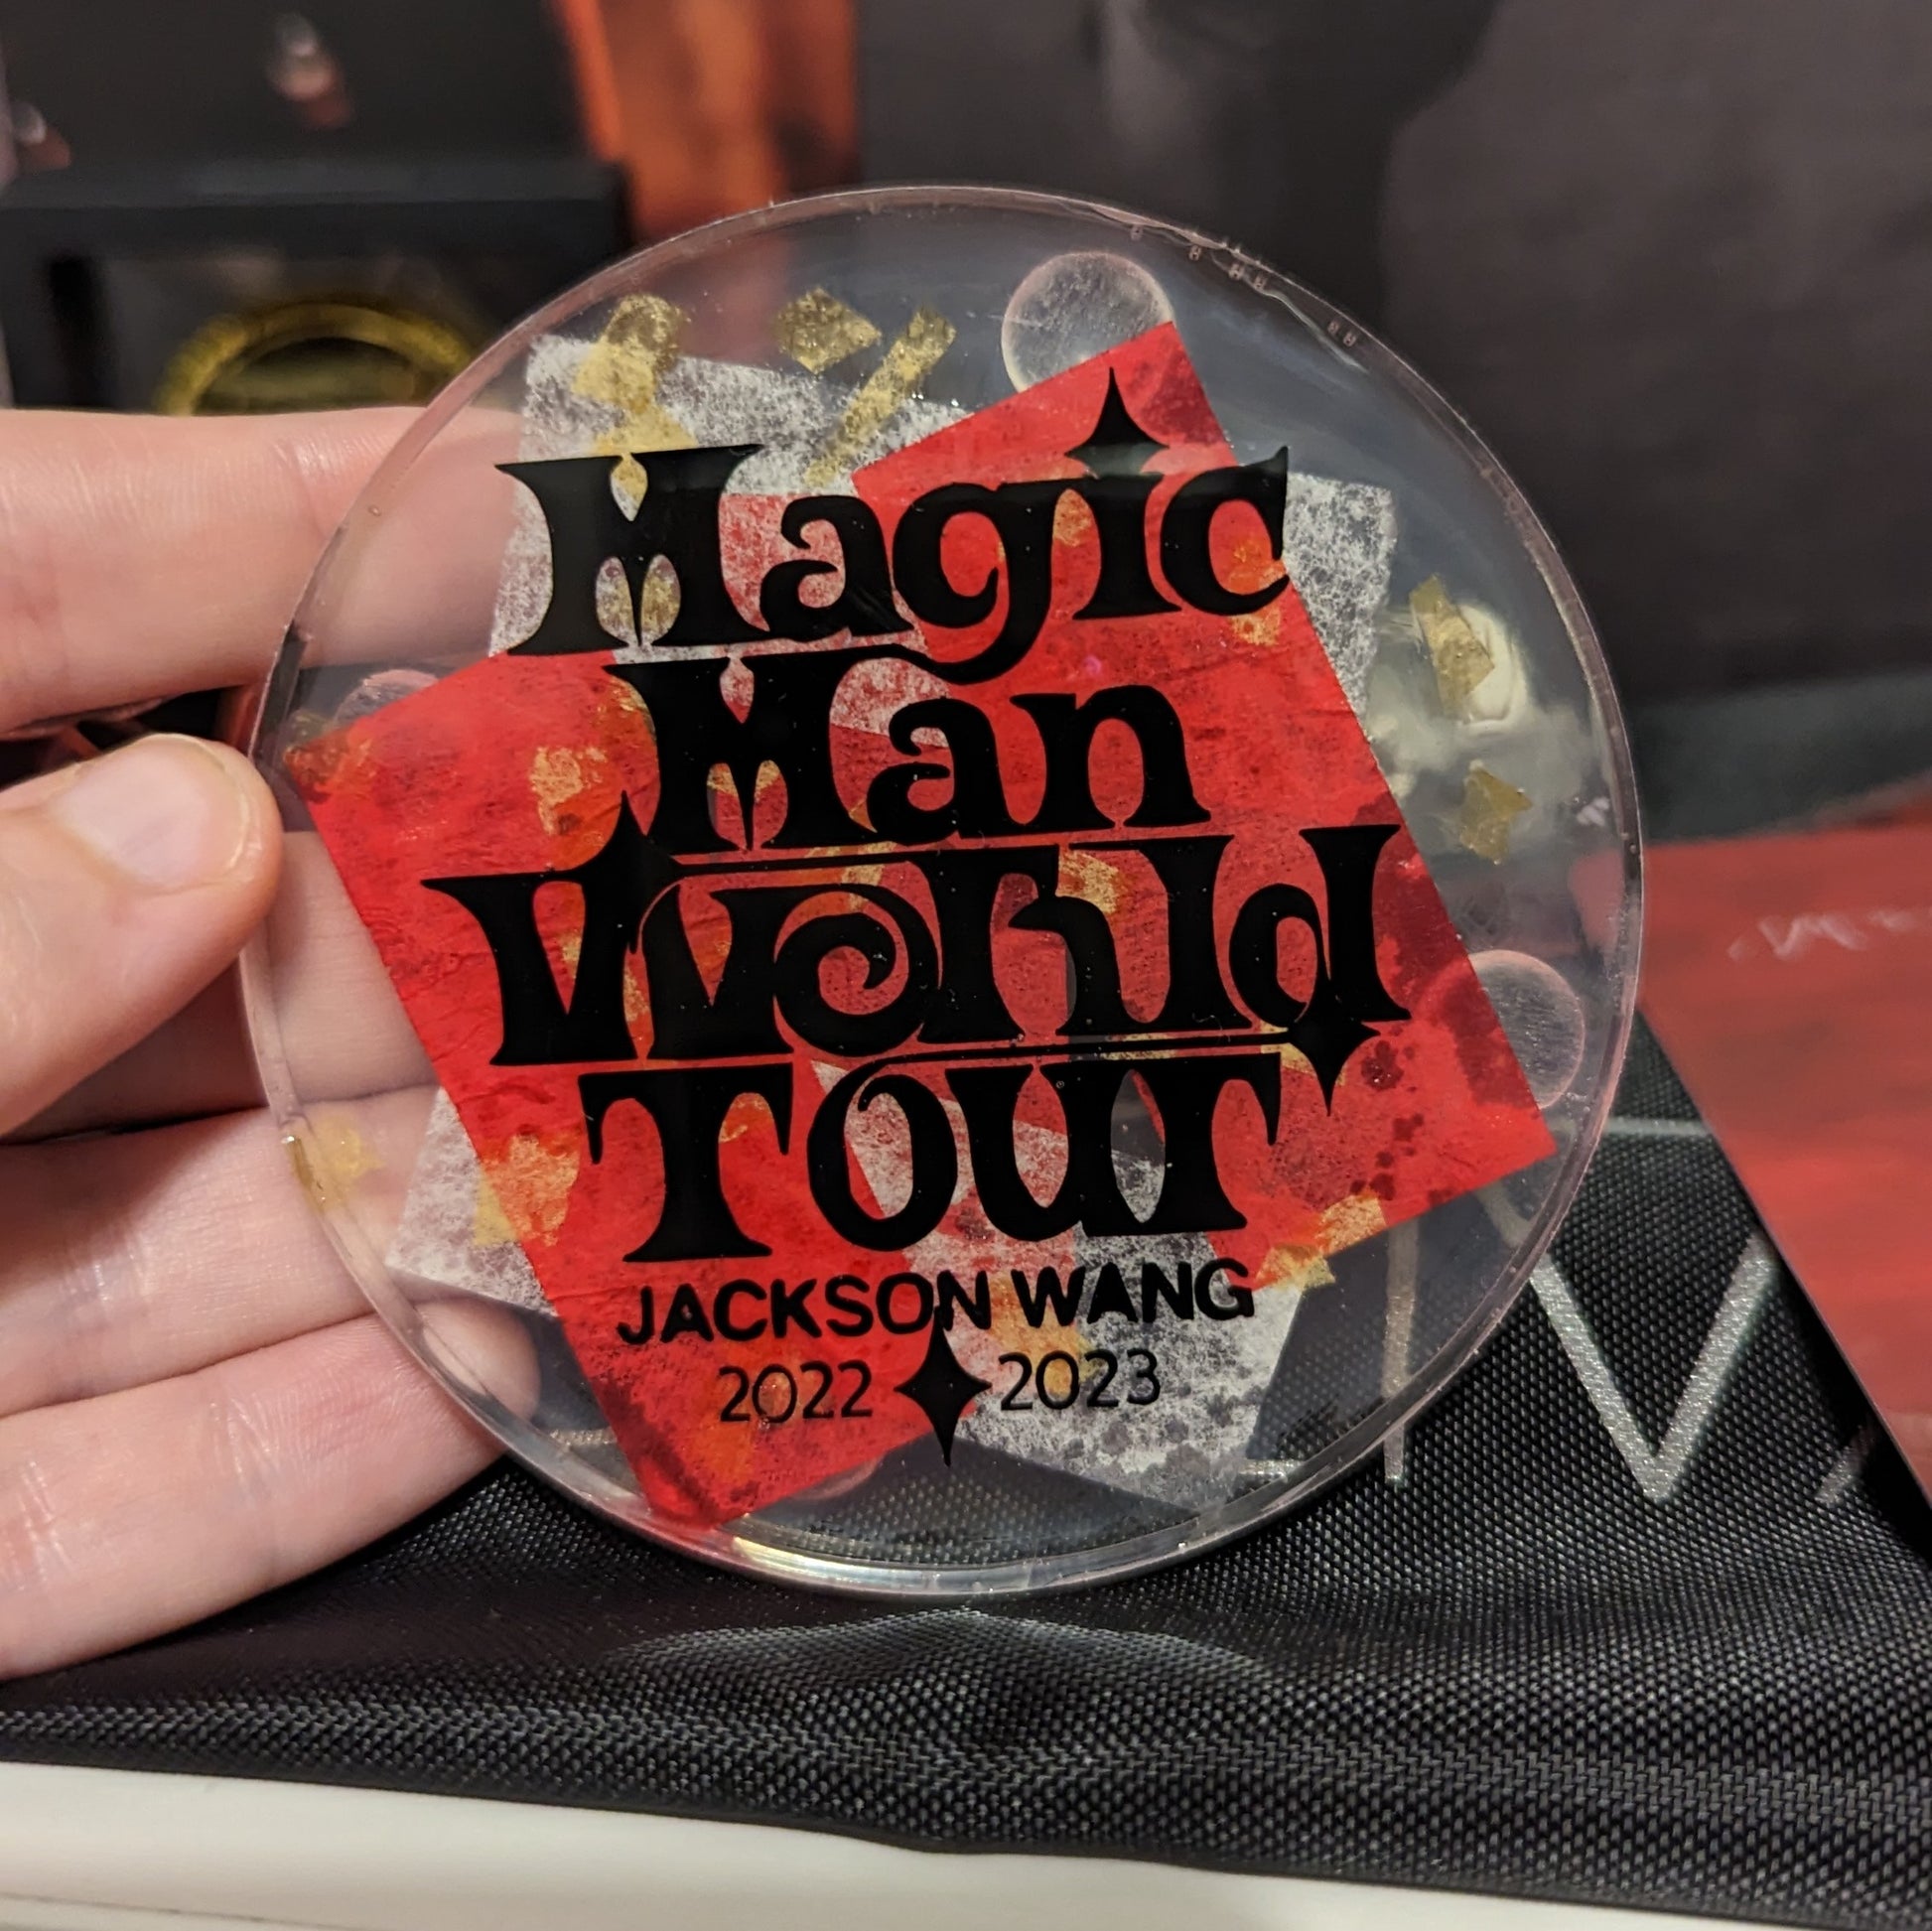 Jackson Wang Magic Man World Tour 2022-2023: Dates, tickets, and more